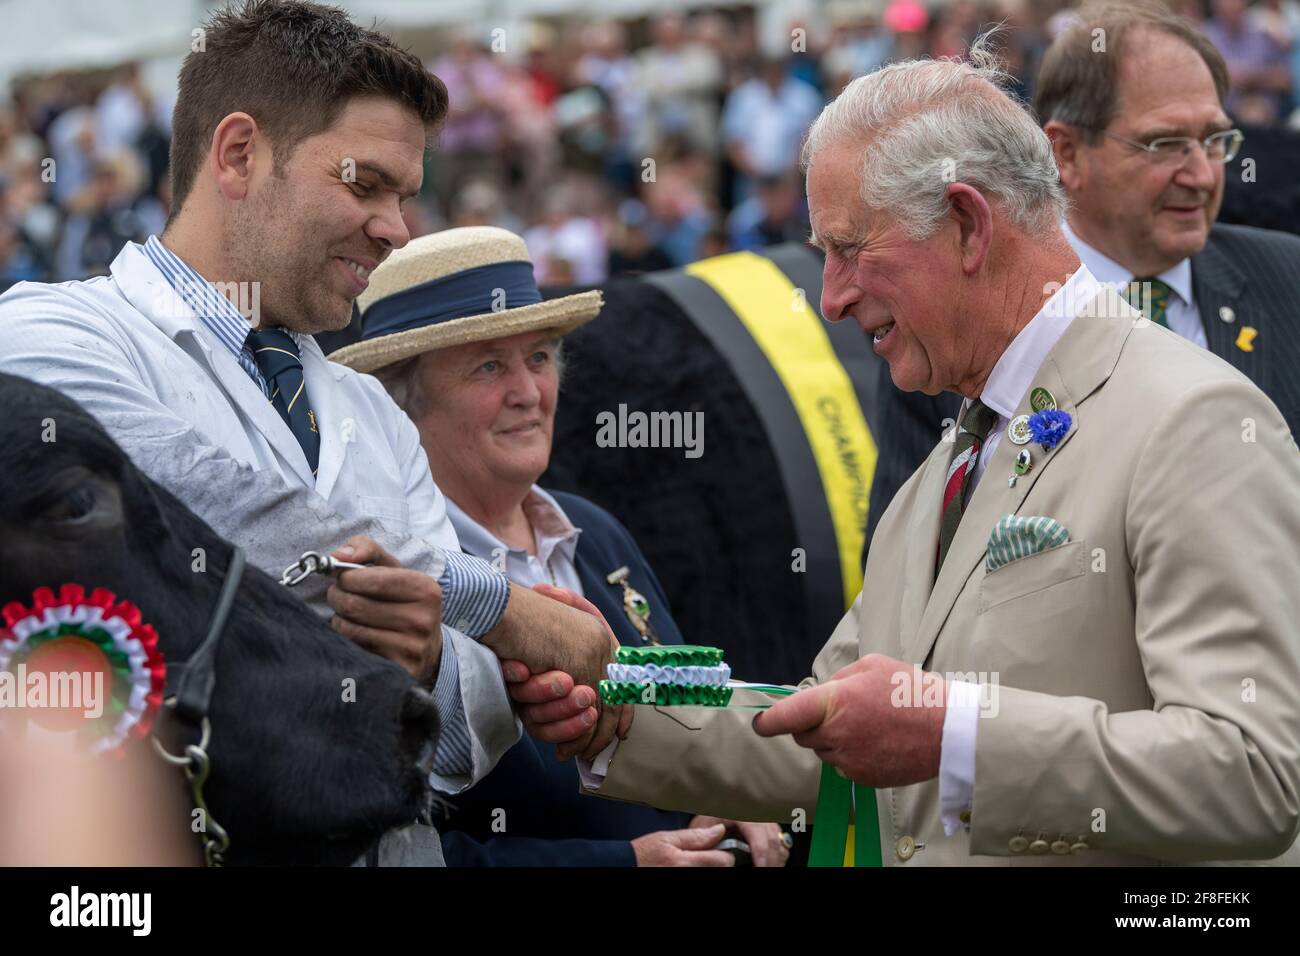 HRH Prince of Wales presenta un trofeo ai proprietari del campione Welsh Black Cattle al Royal Welsh Show nel 2019. Foto Stock